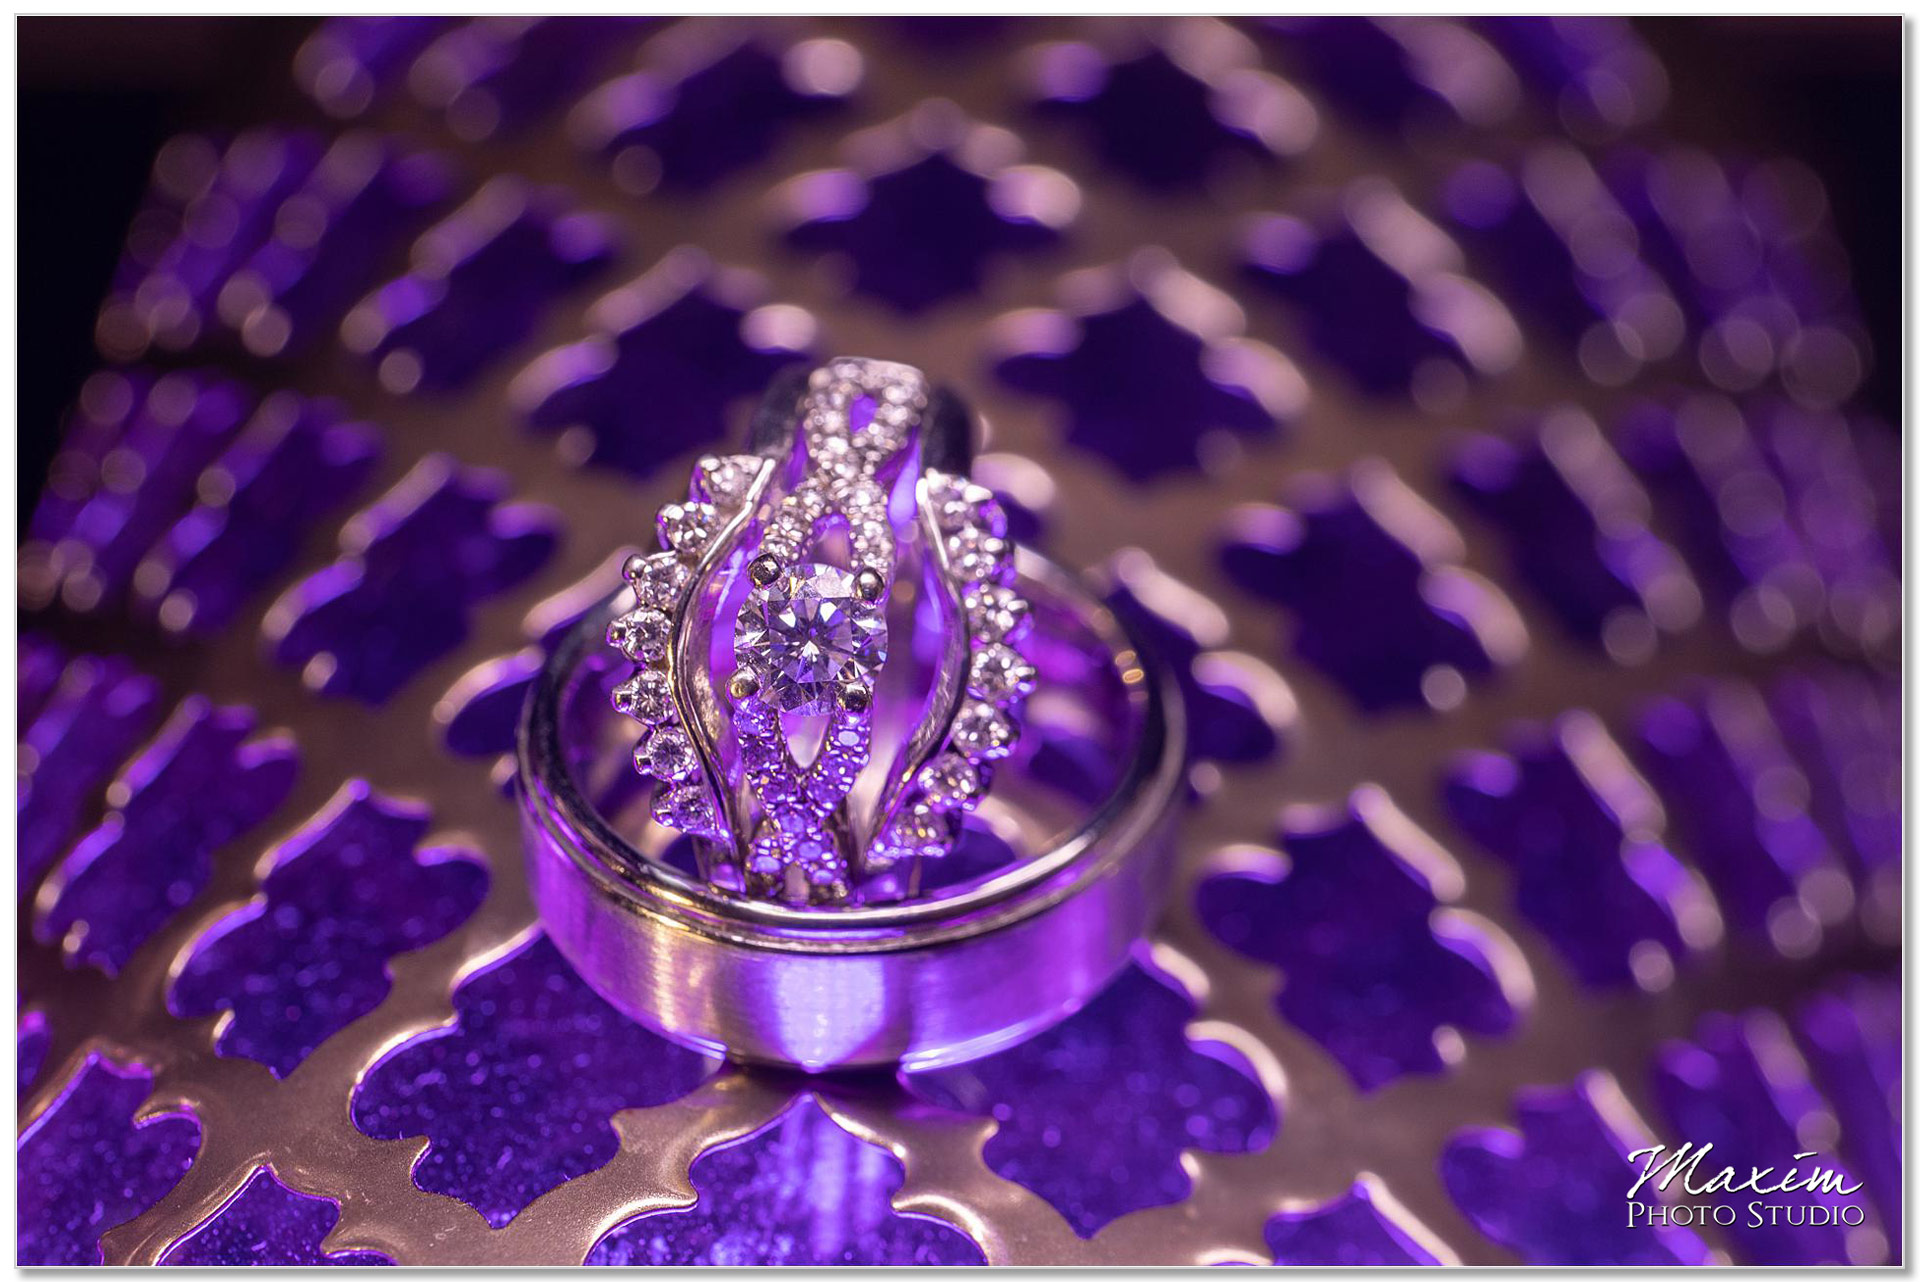 The Transept Wedding ring